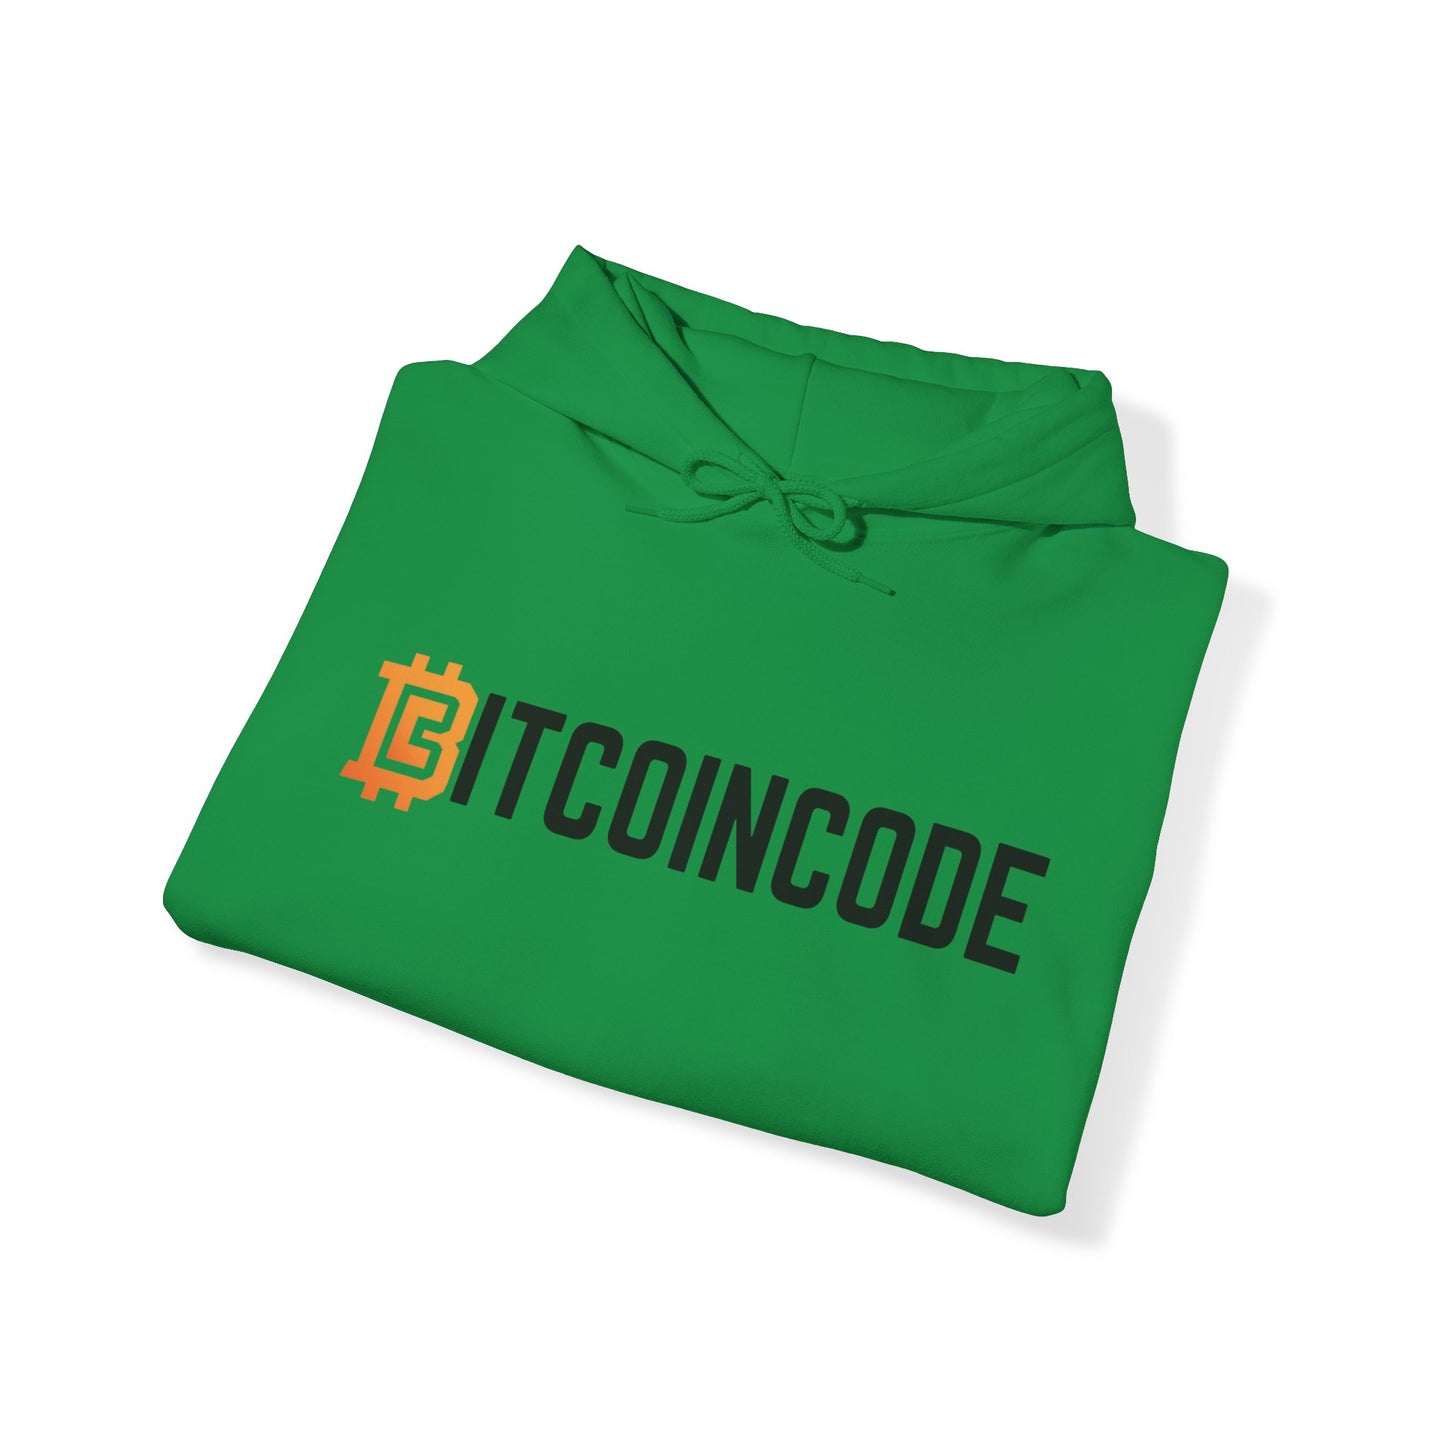 Bitcoincode Minimalist Unisex  Hoodie